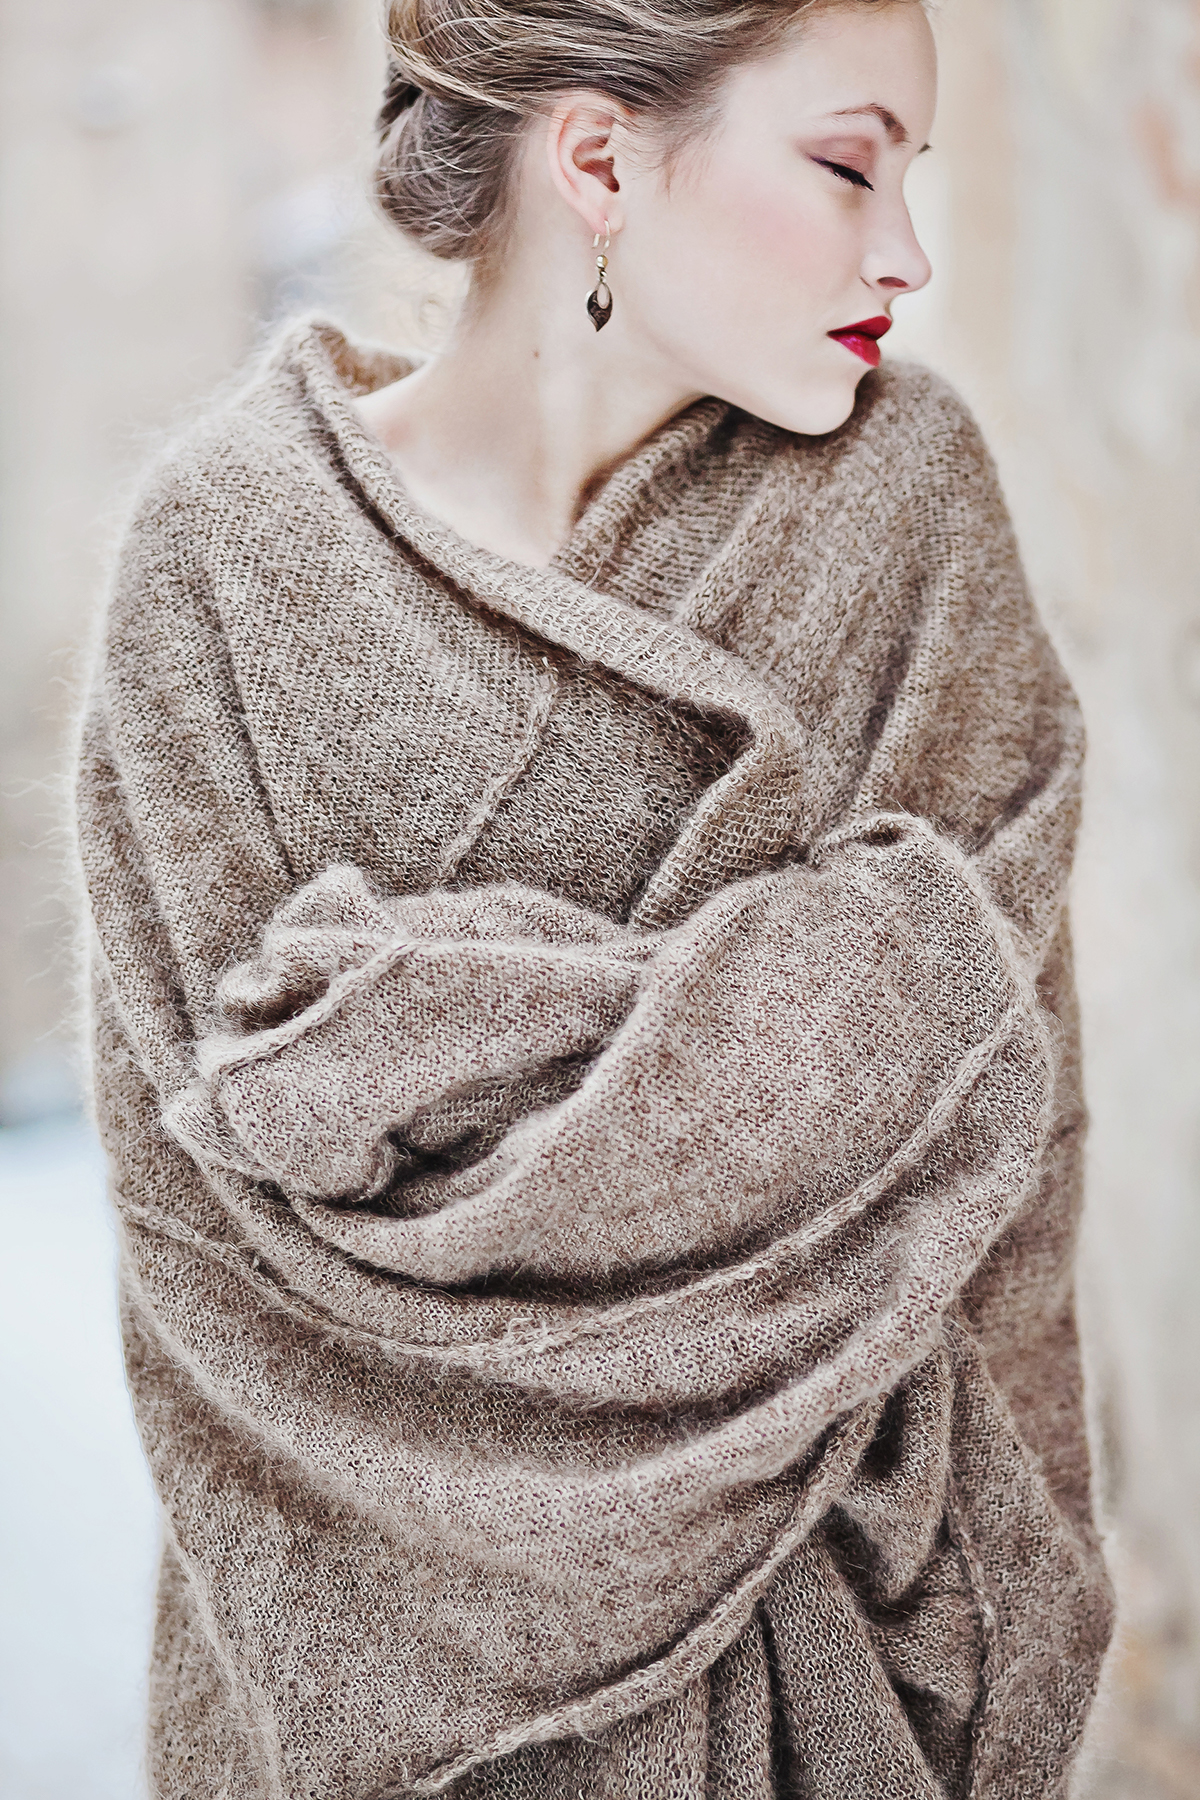 Lookbook Clothing winter wool knitting Style dark natural rustic